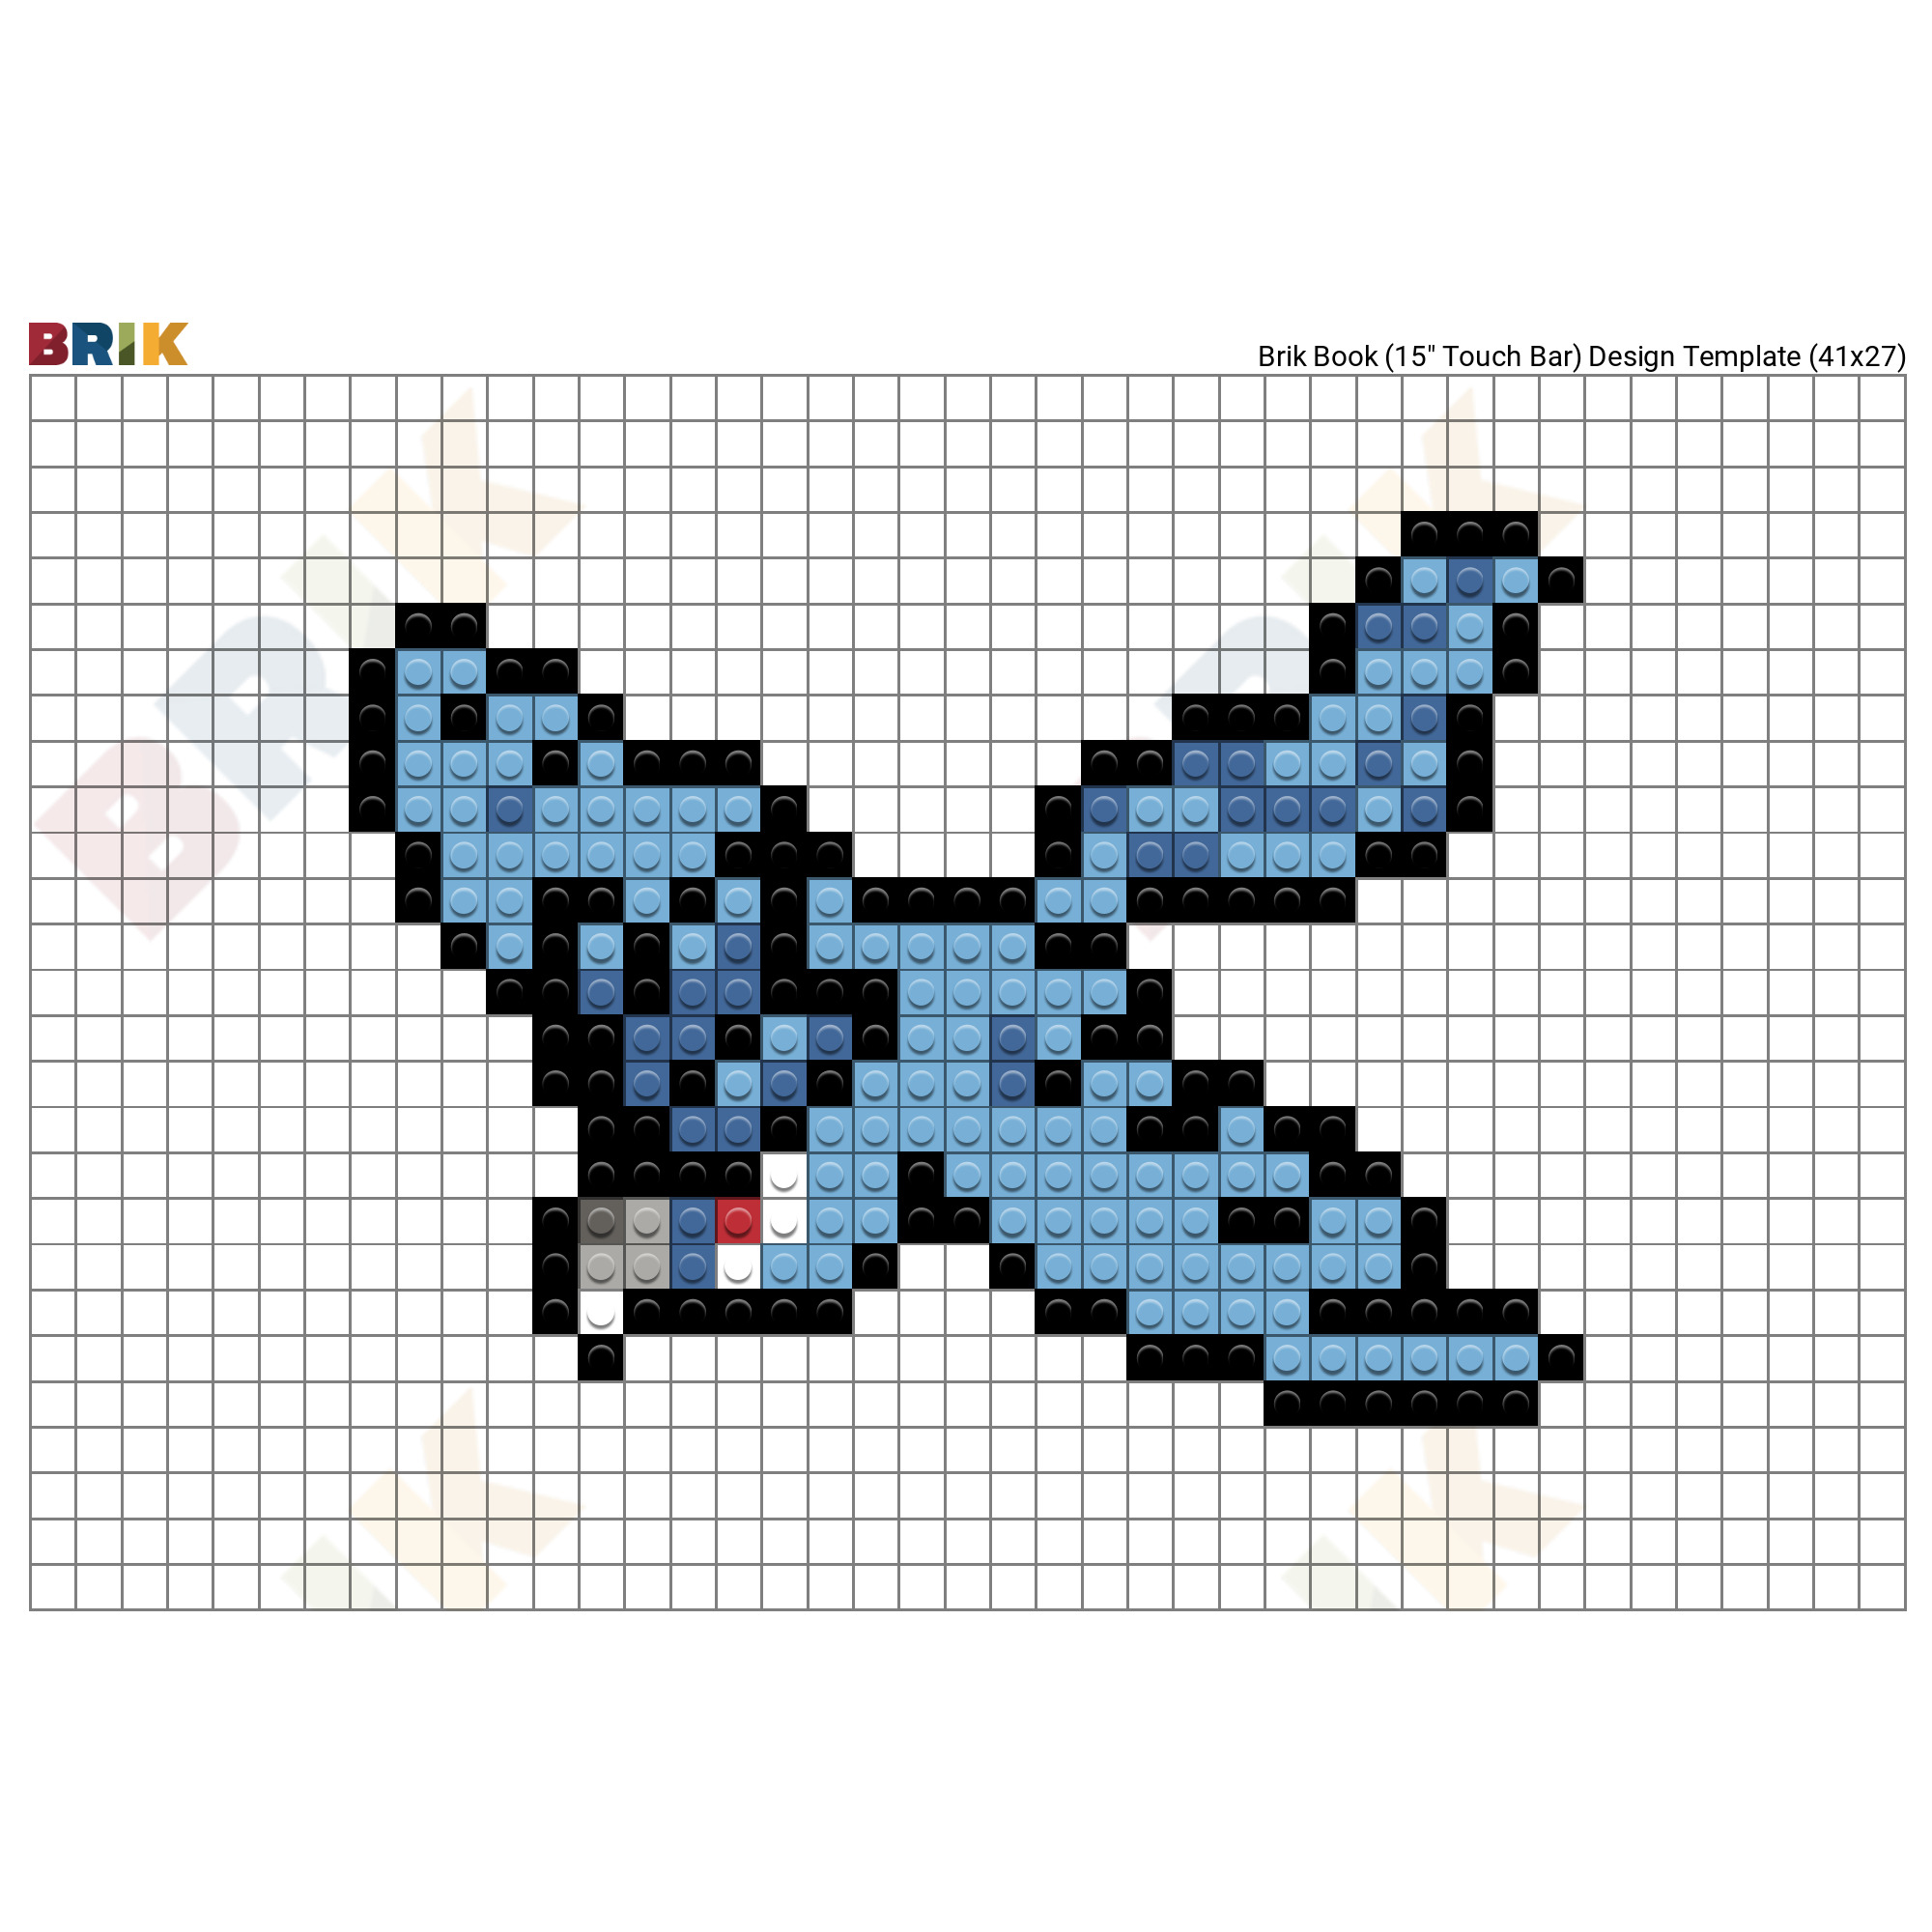 pixel art minecraft pokemon legendary